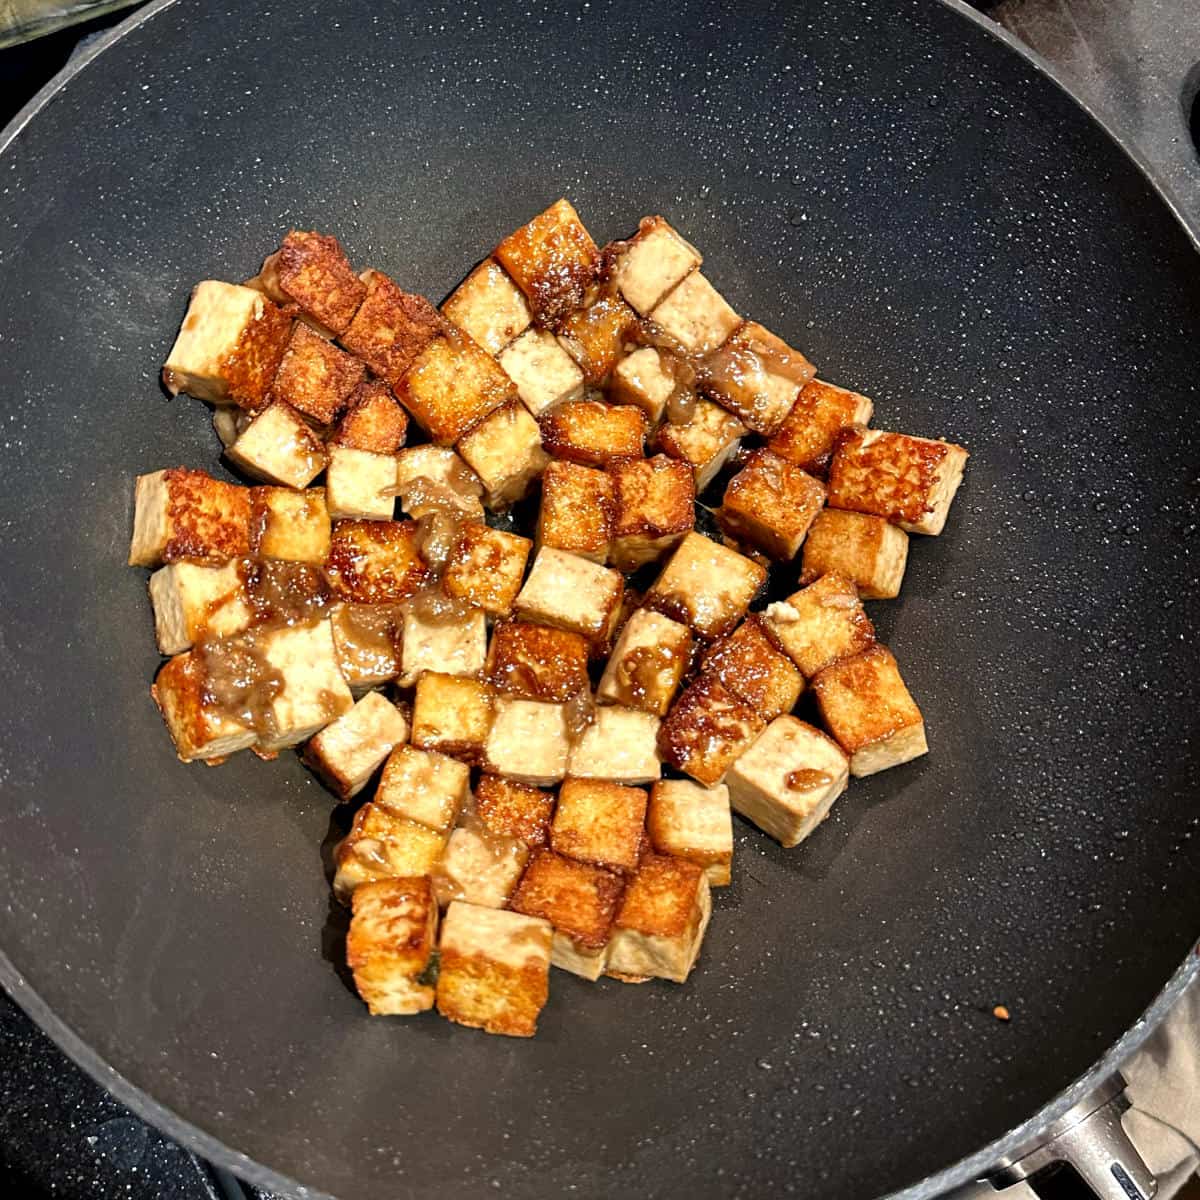 Tofu fried in wok for chilli tofu.